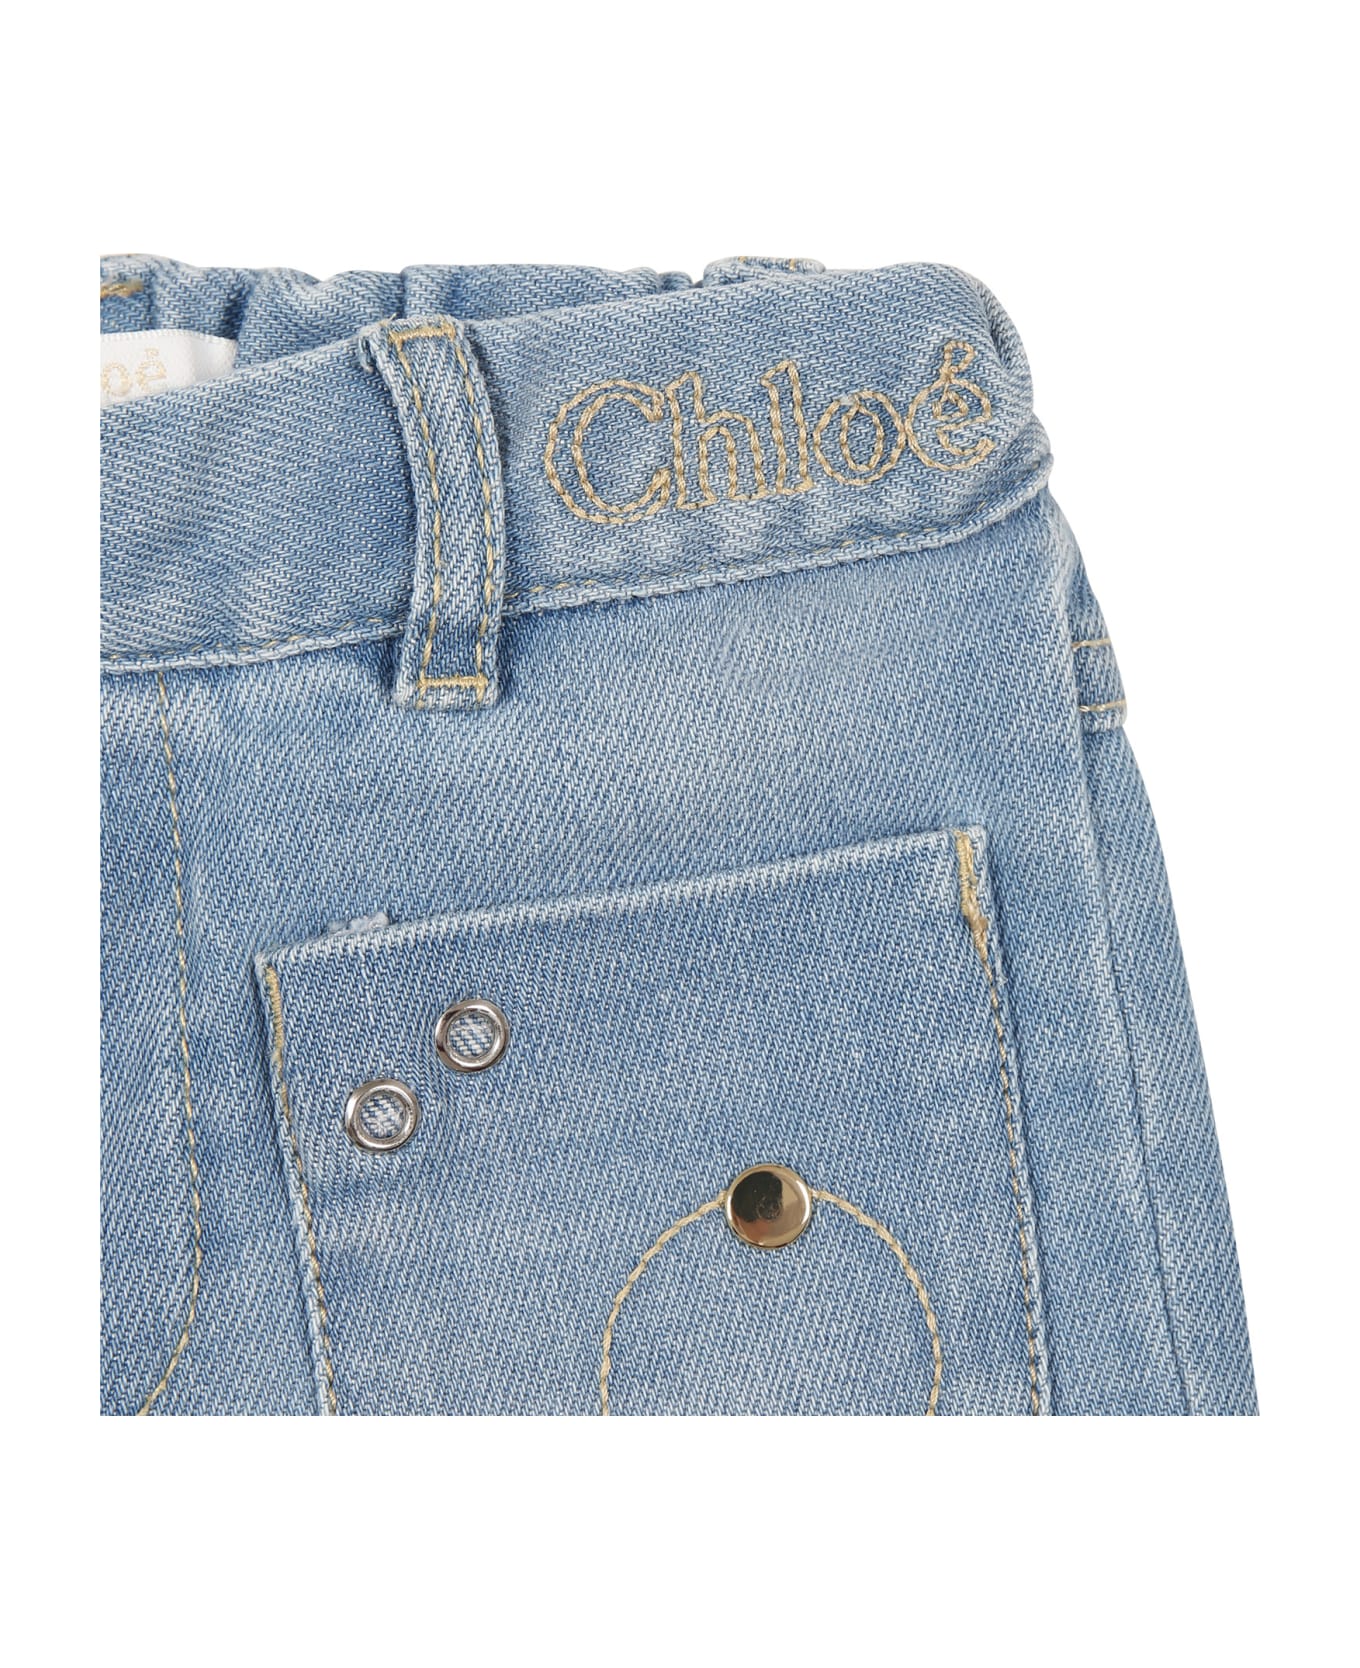 Chloé Denim Jeans For Baby Girl - Denim